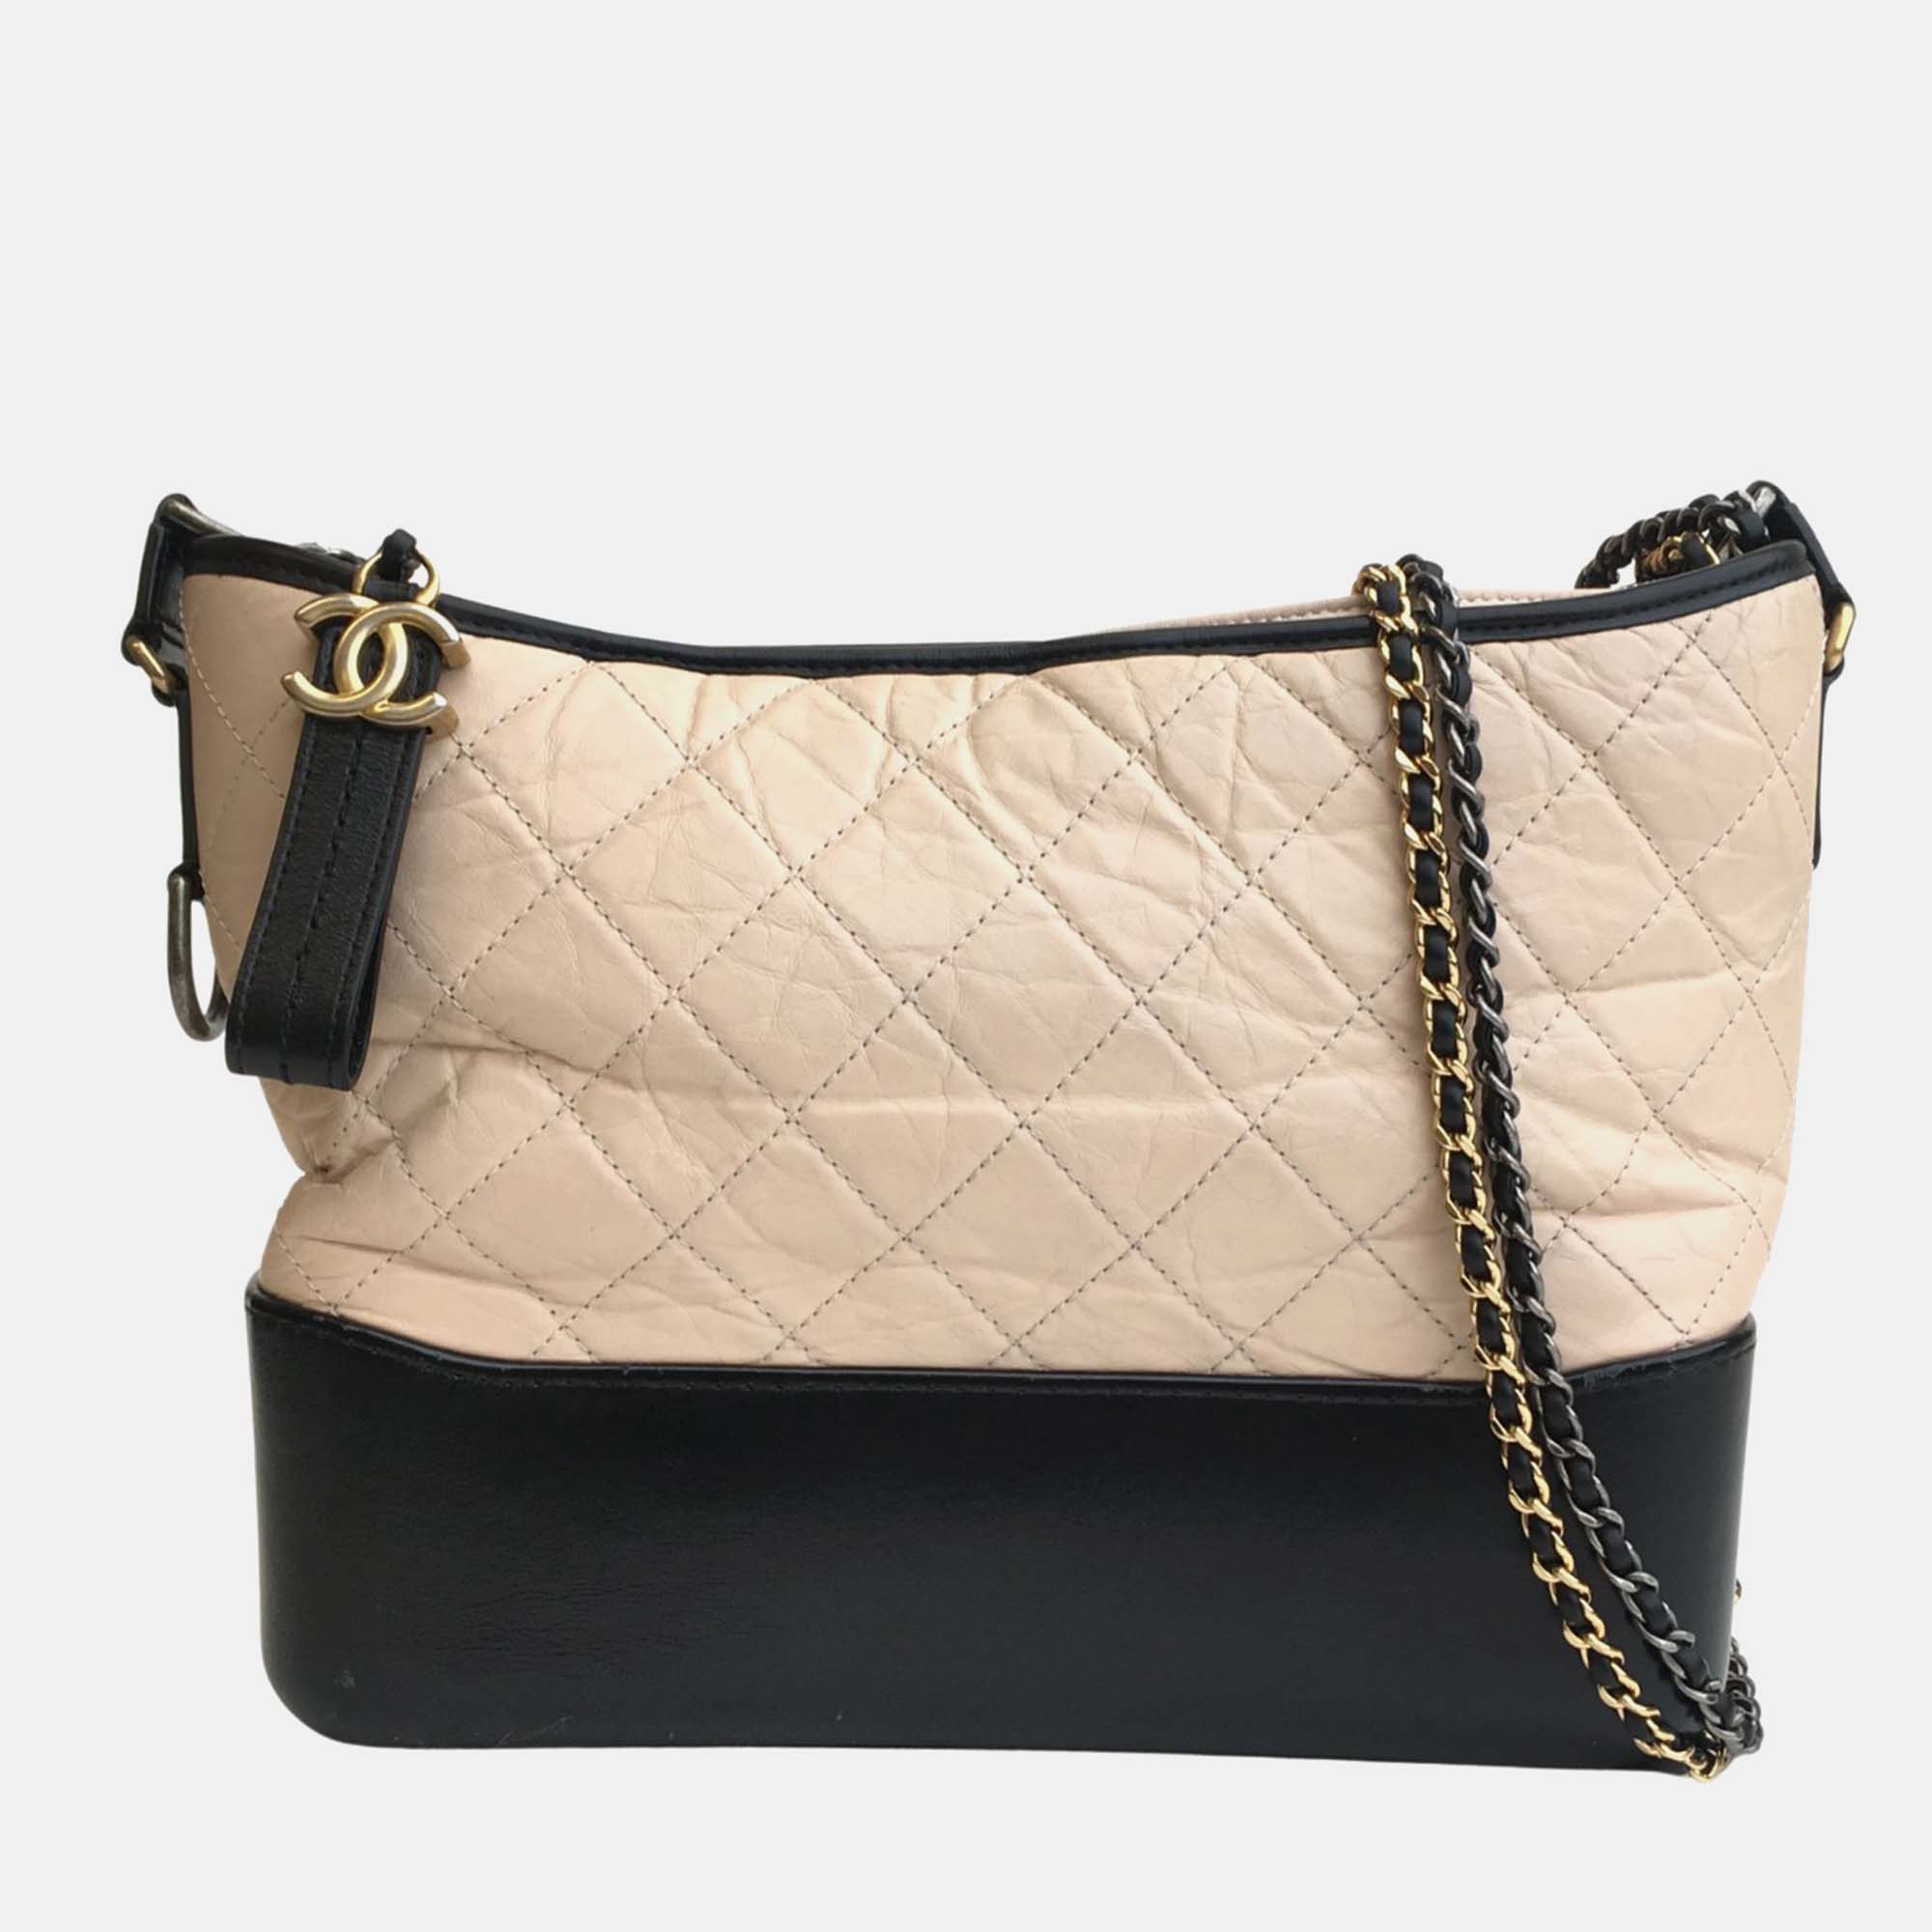 Chanel beige/black leather large gabrielle hobo bag